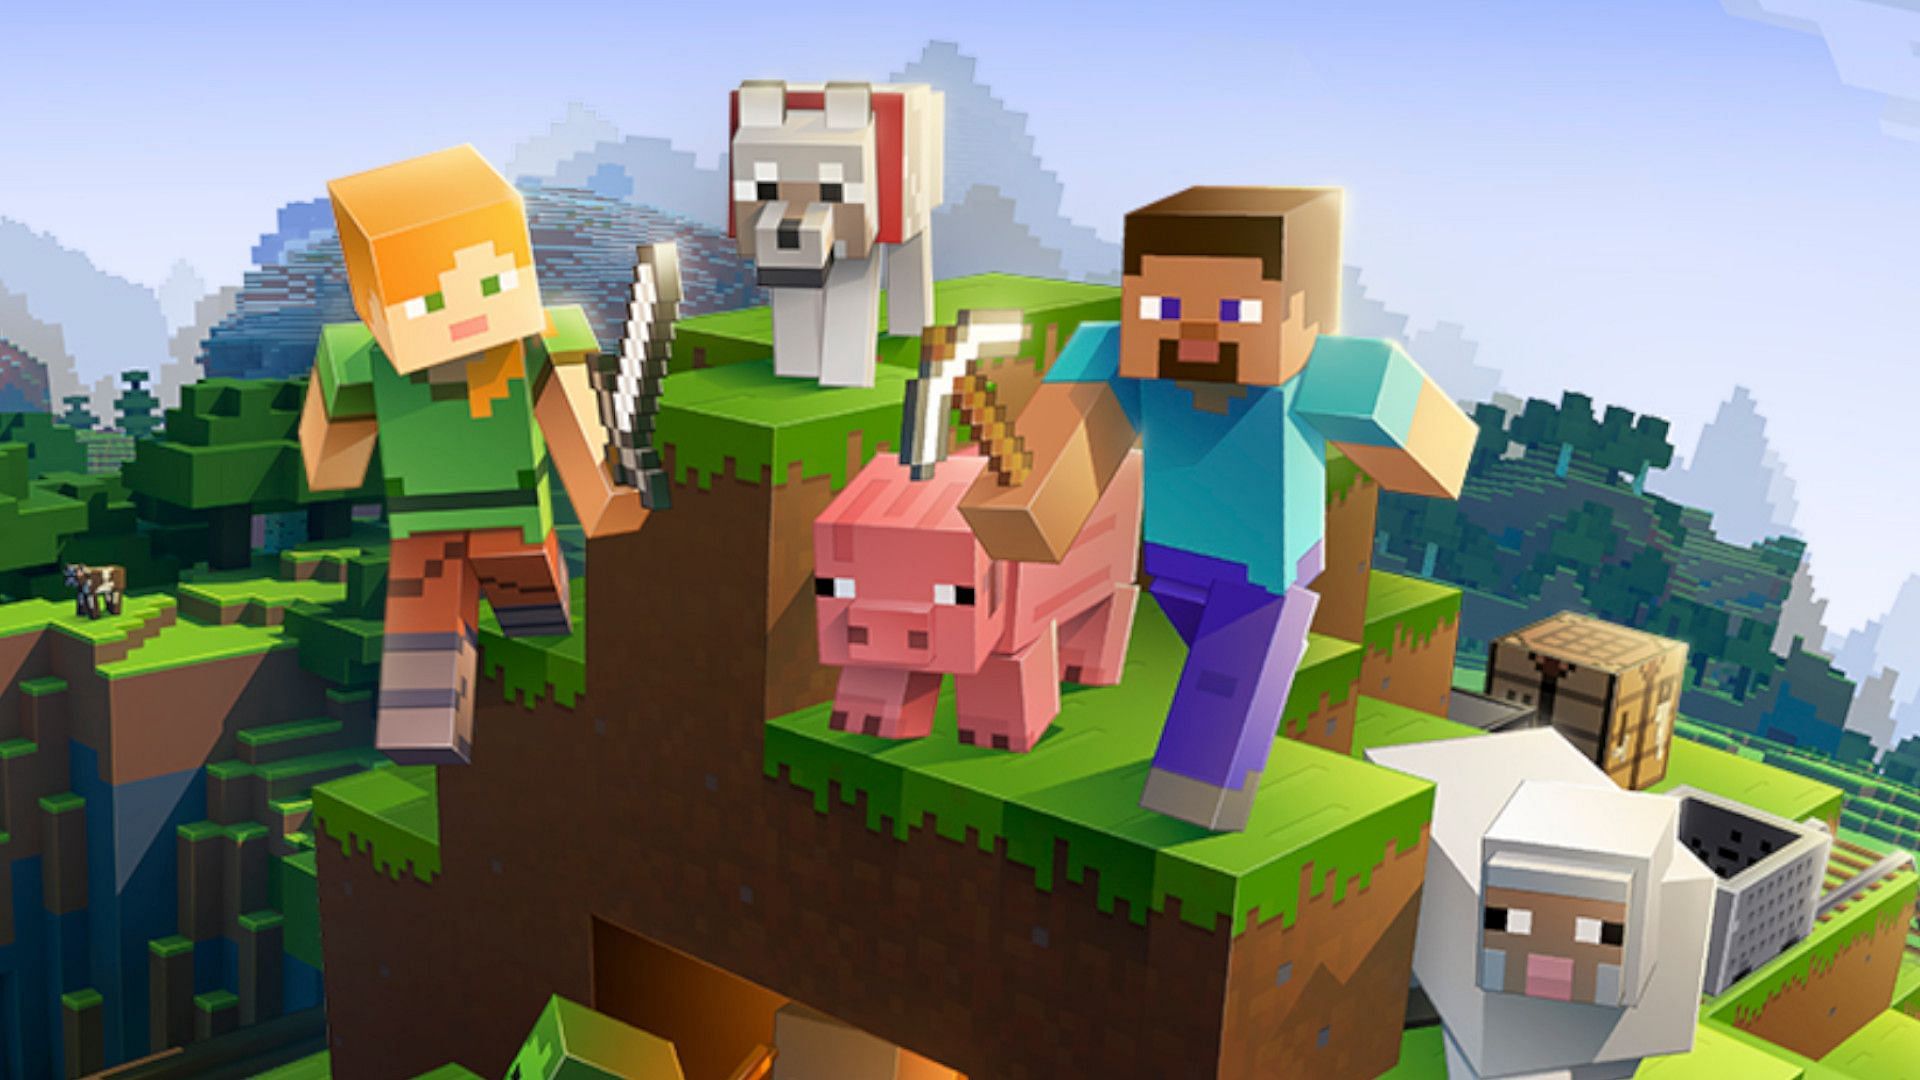 Speedrunning Minecraft has become popular thanks to popular streamers like Dream (Image via Mojang)